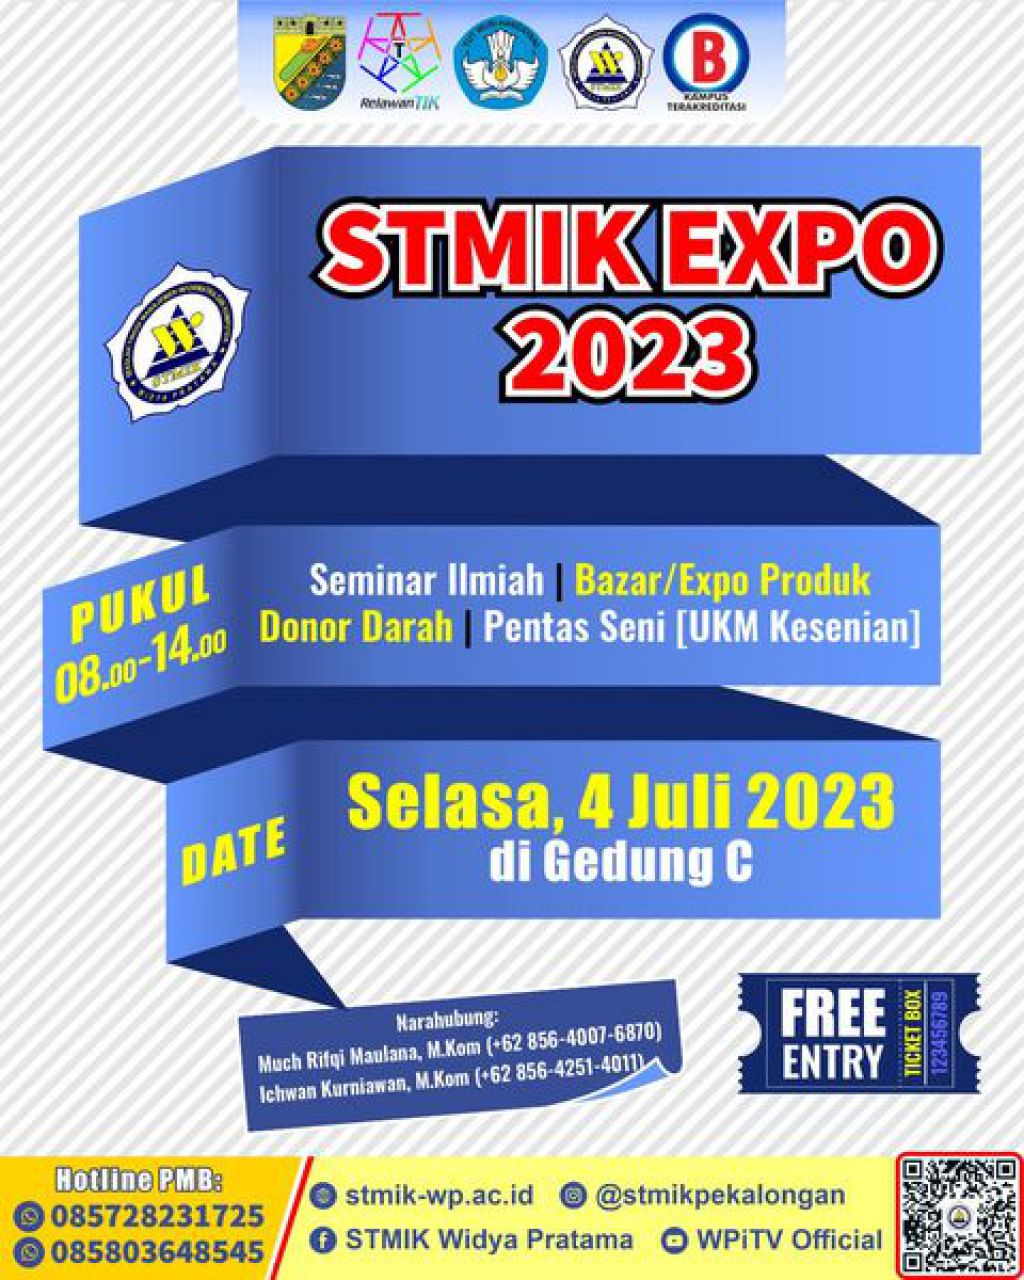 stmik-widya-pratama-expo-2023